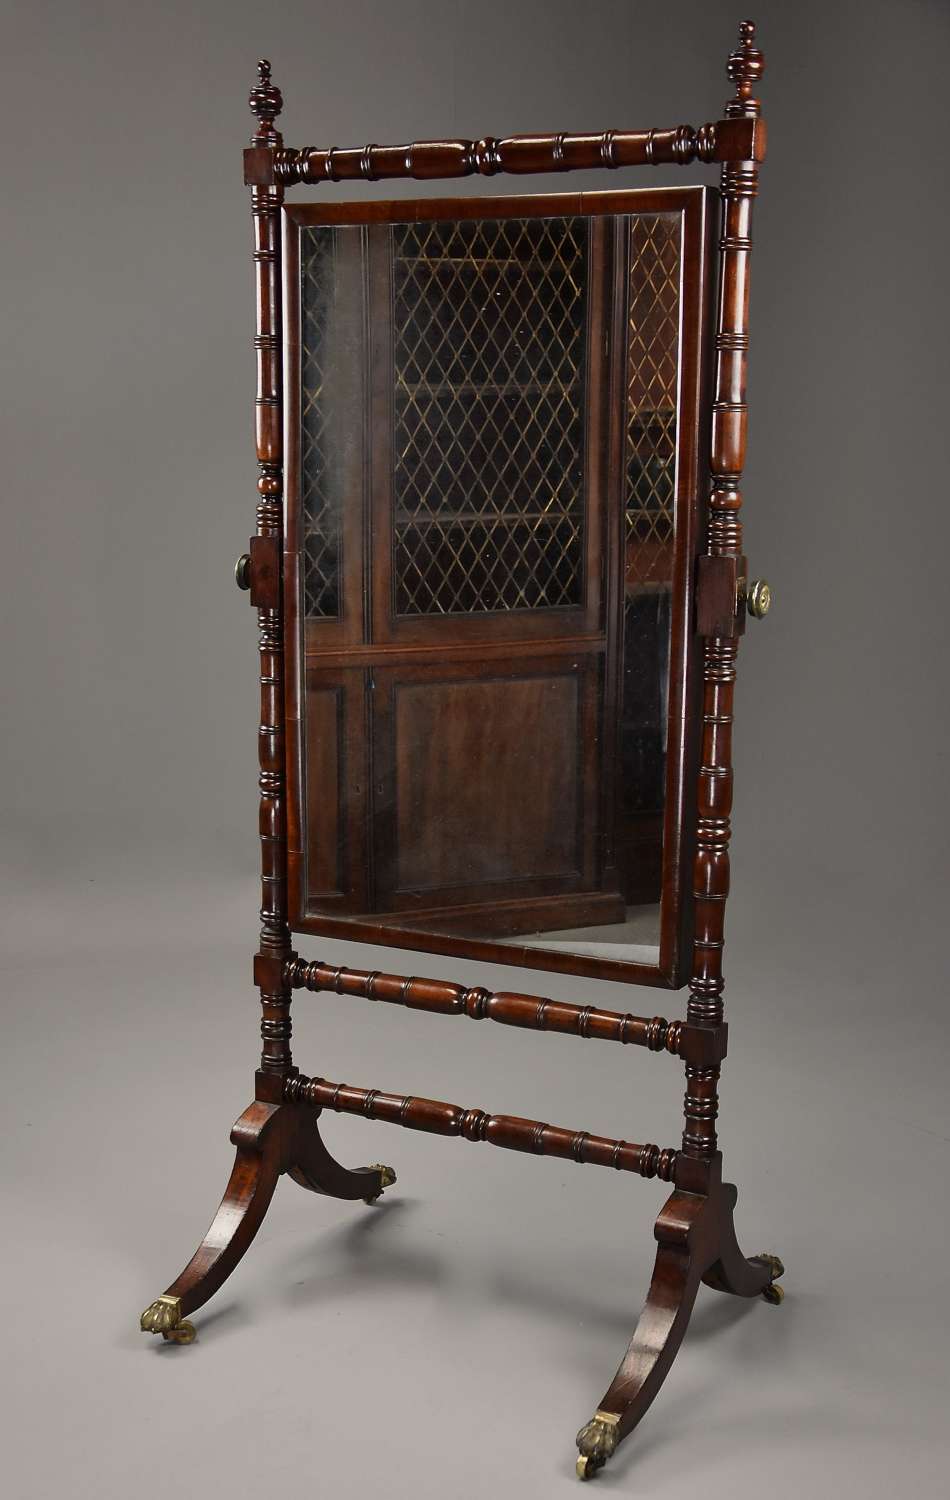 Fine quality early 19thc Regency mahogany cheval dressing mirror